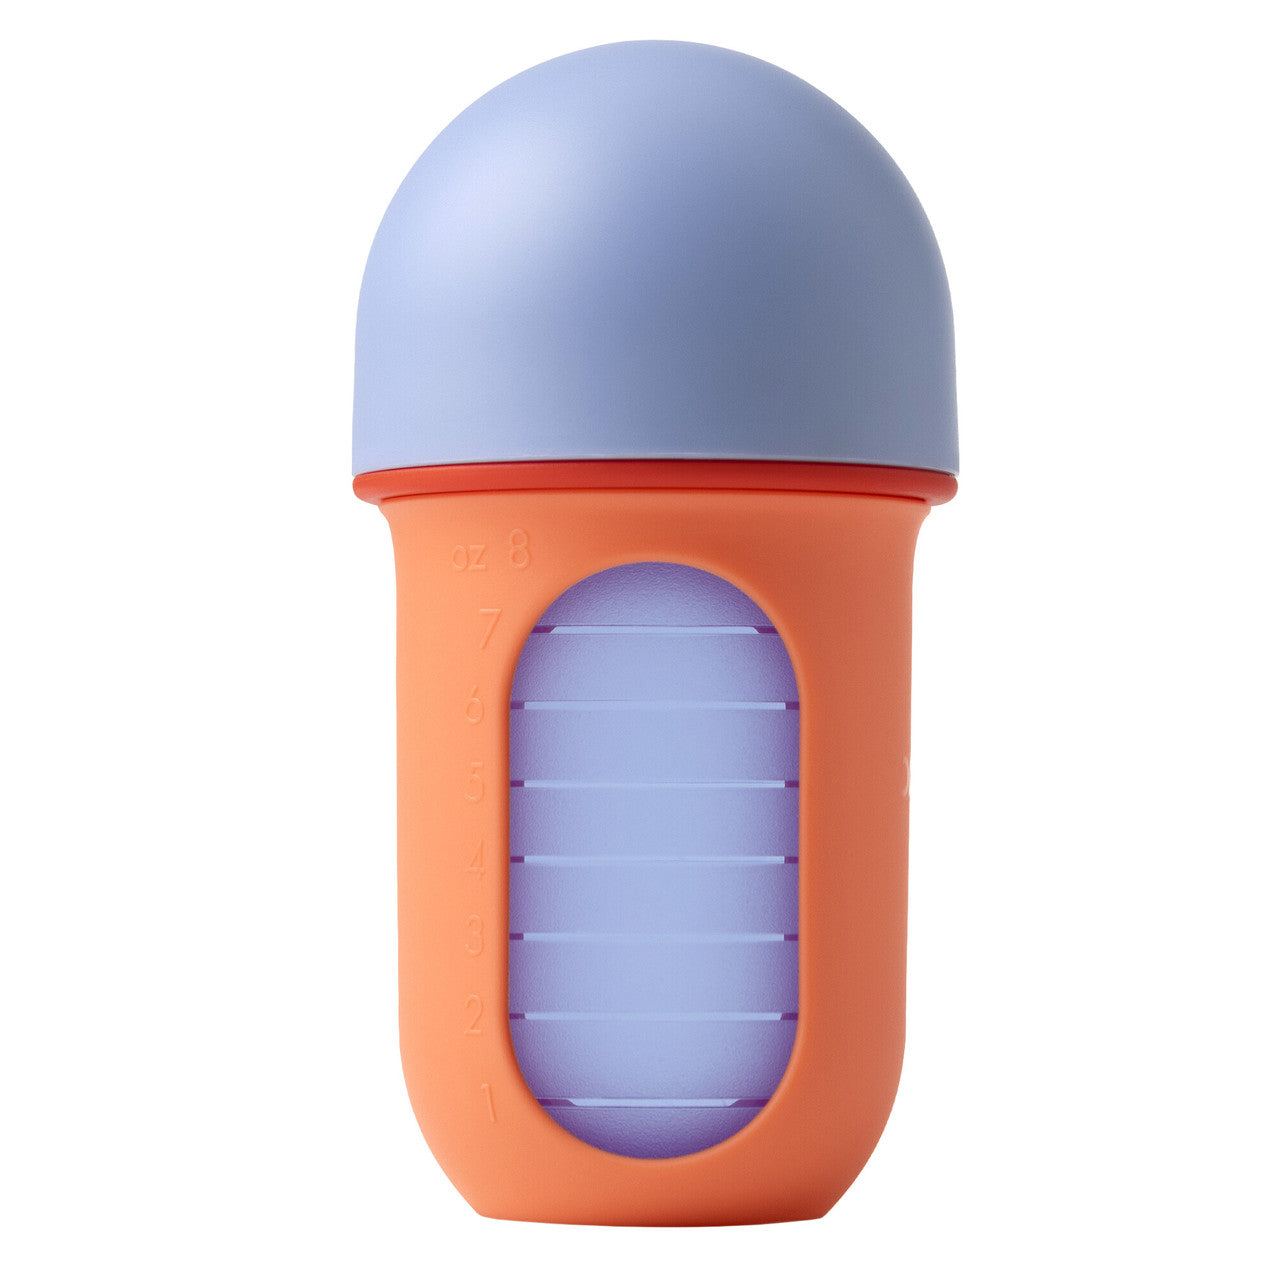 Boon NURSH Silicone Pouch Bottle 8oz (3-Pack) - Colorblock-BOON-Little Giant Kidz